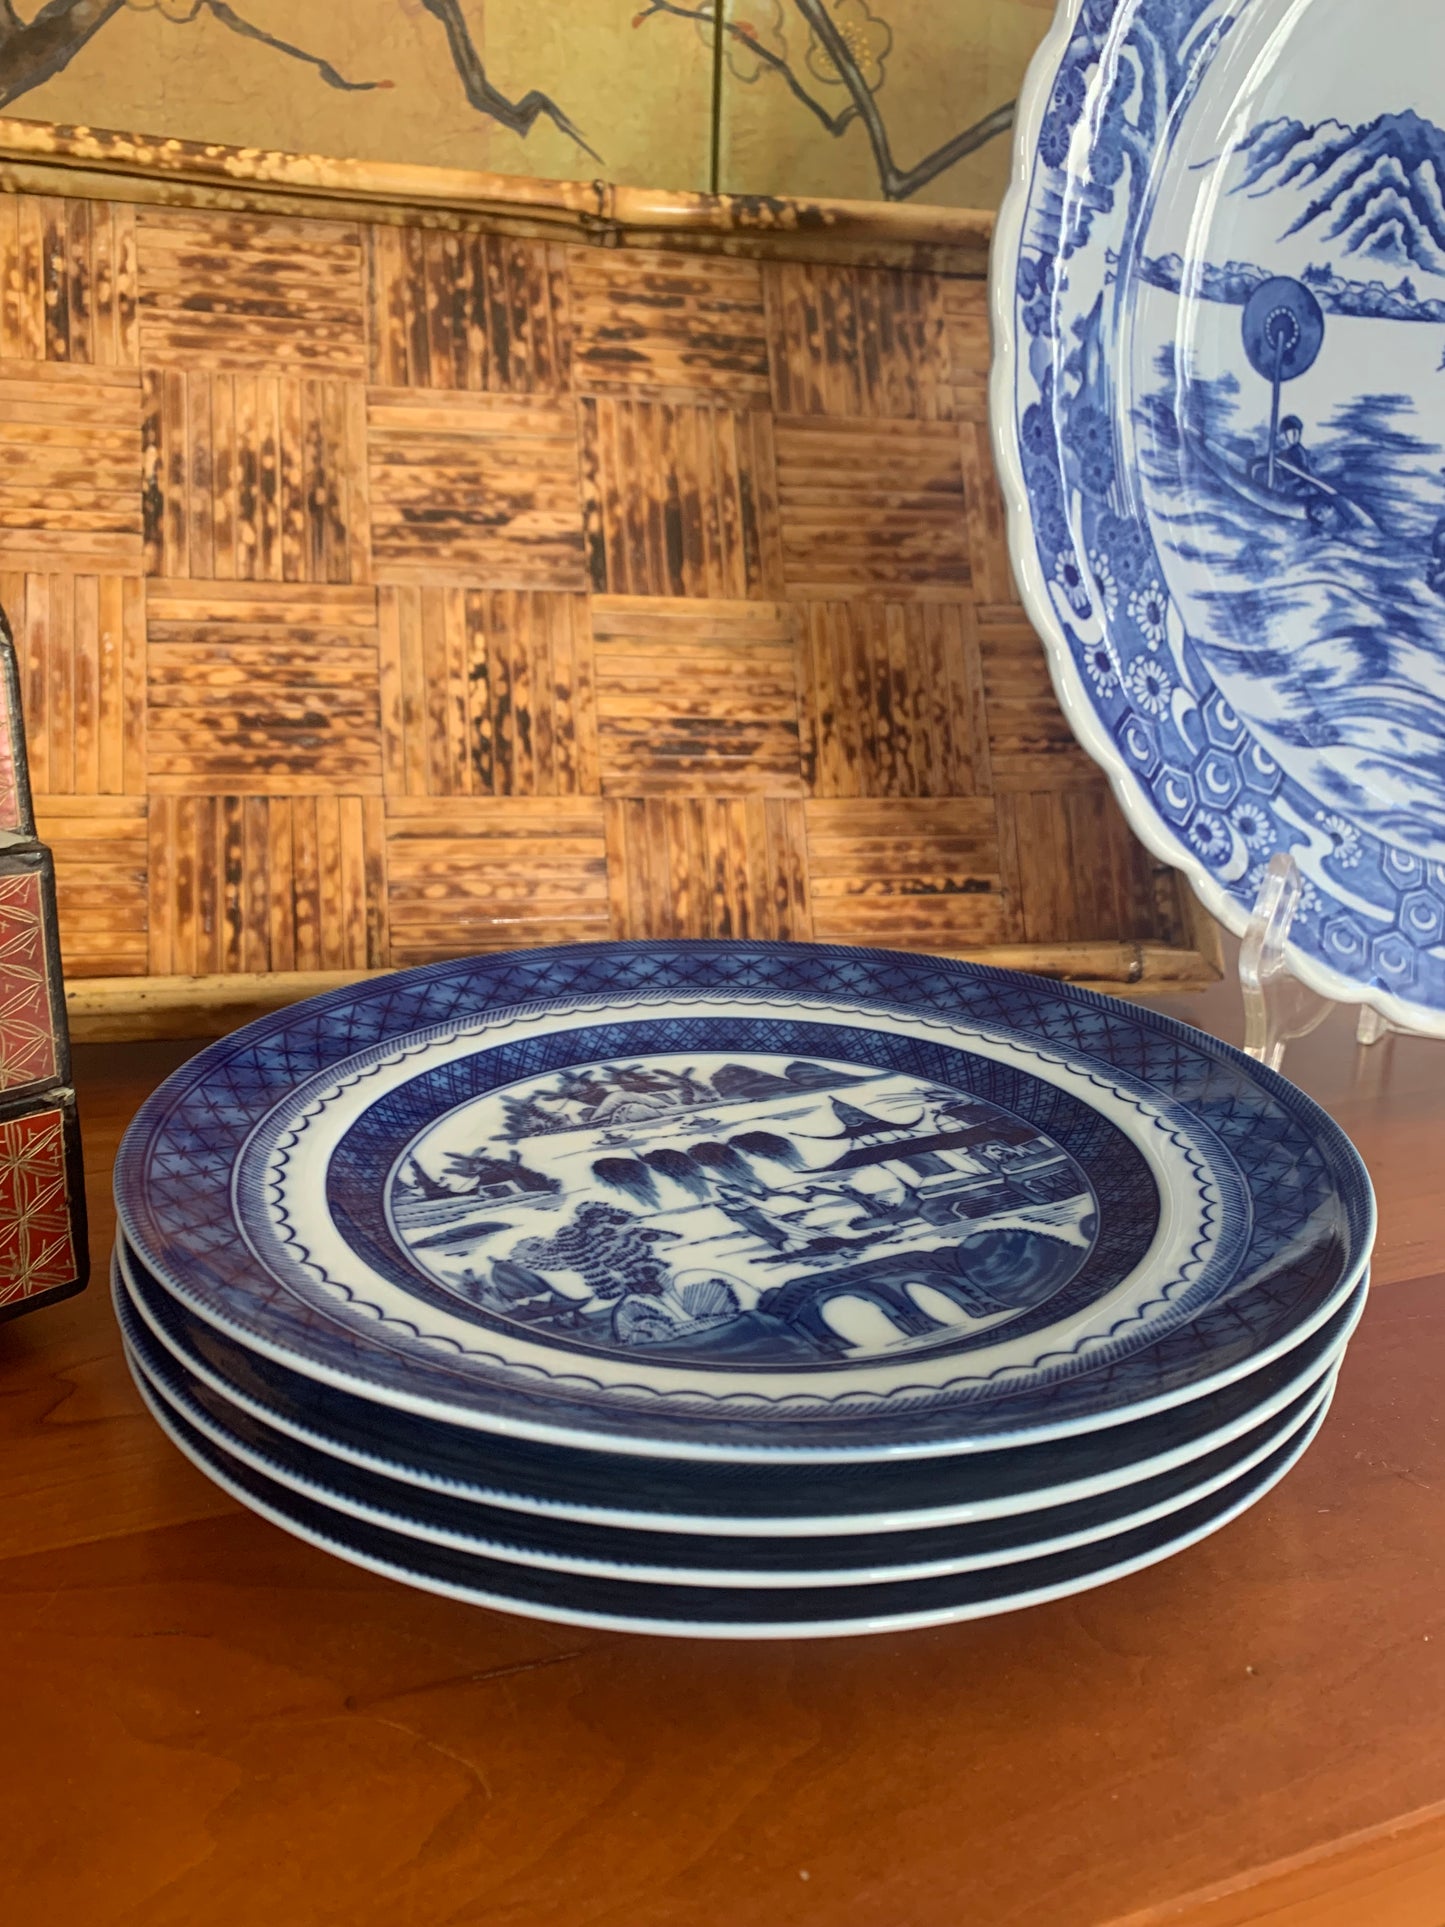 Set (4) Mottahedeh Blue Canton 10” Dinner Plates - Excellent!